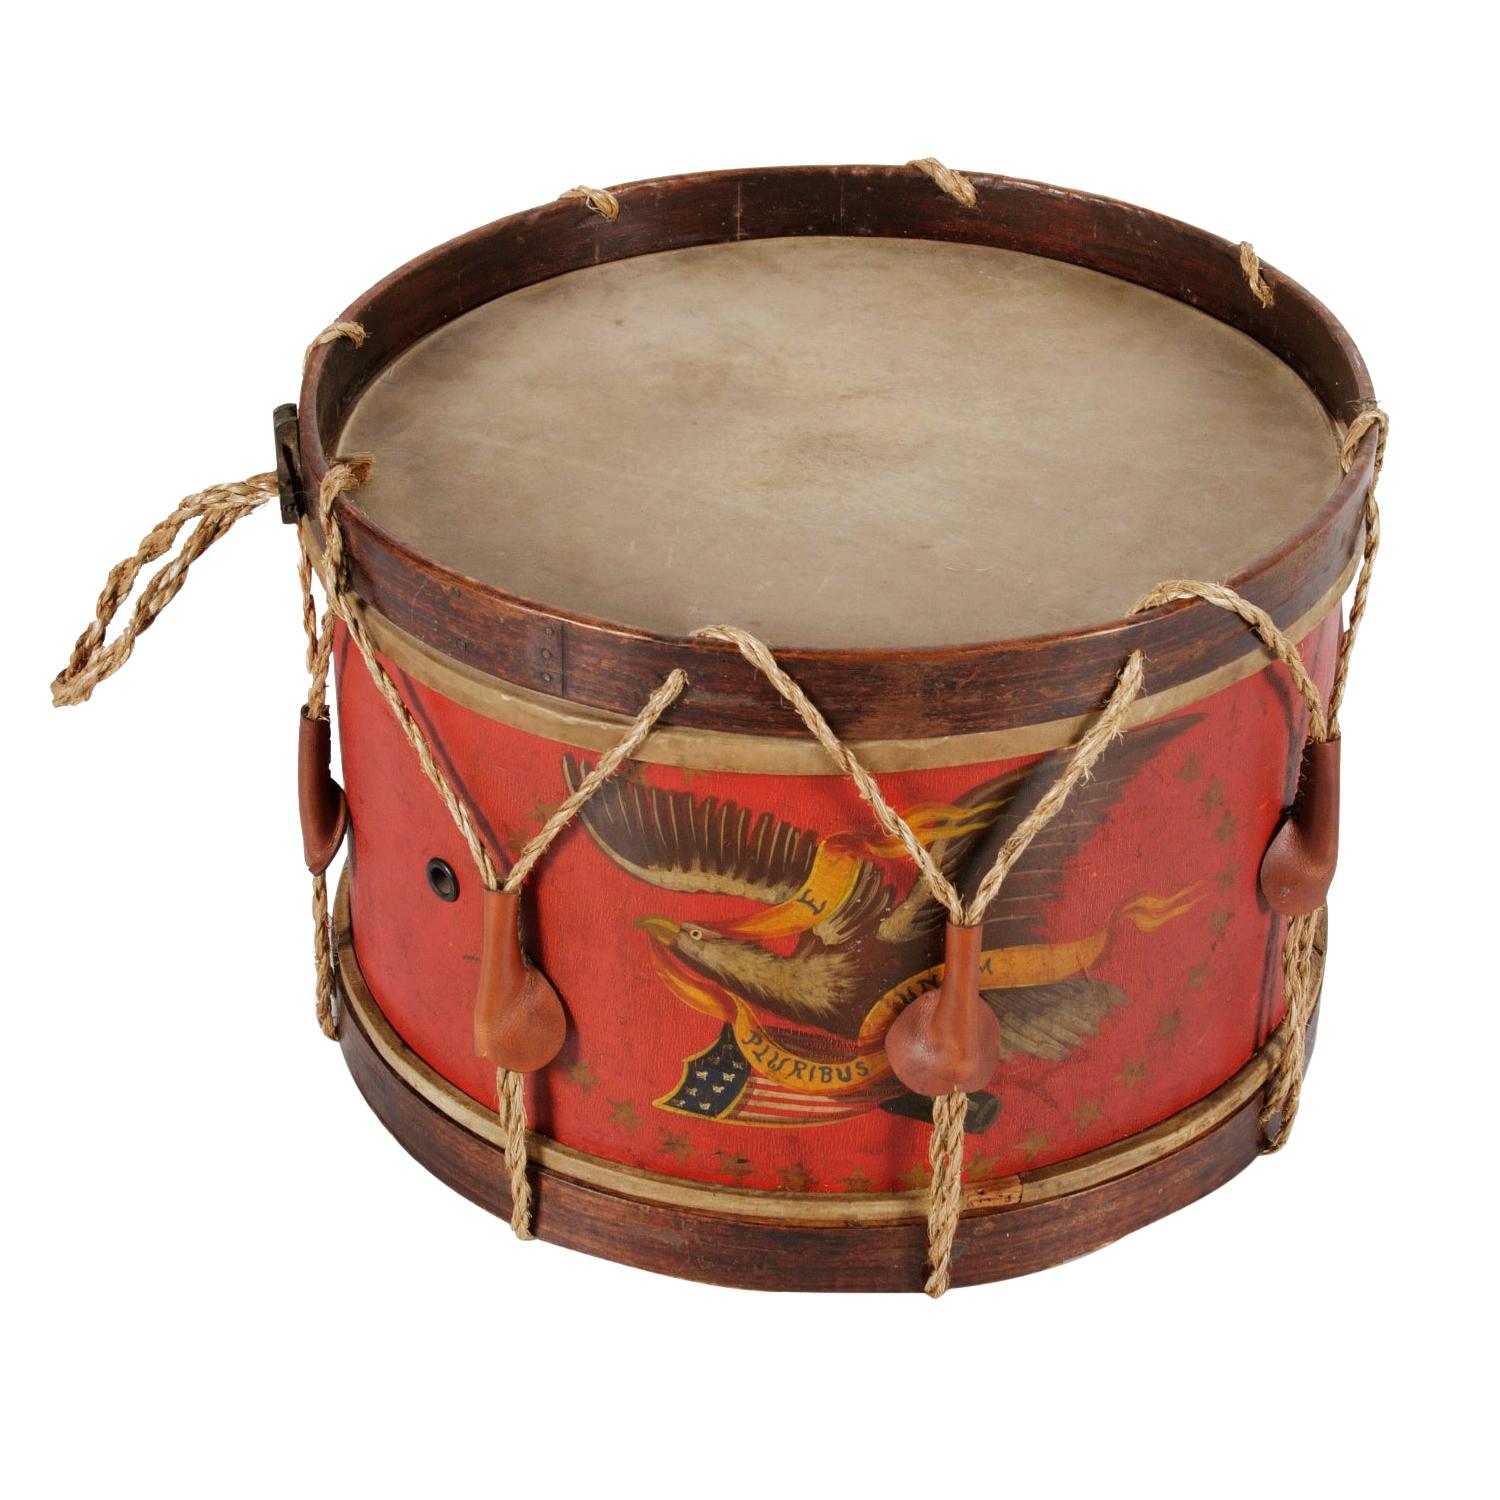 Civil War Drum Made by John C Haynes Company of Boston, Massachusetts